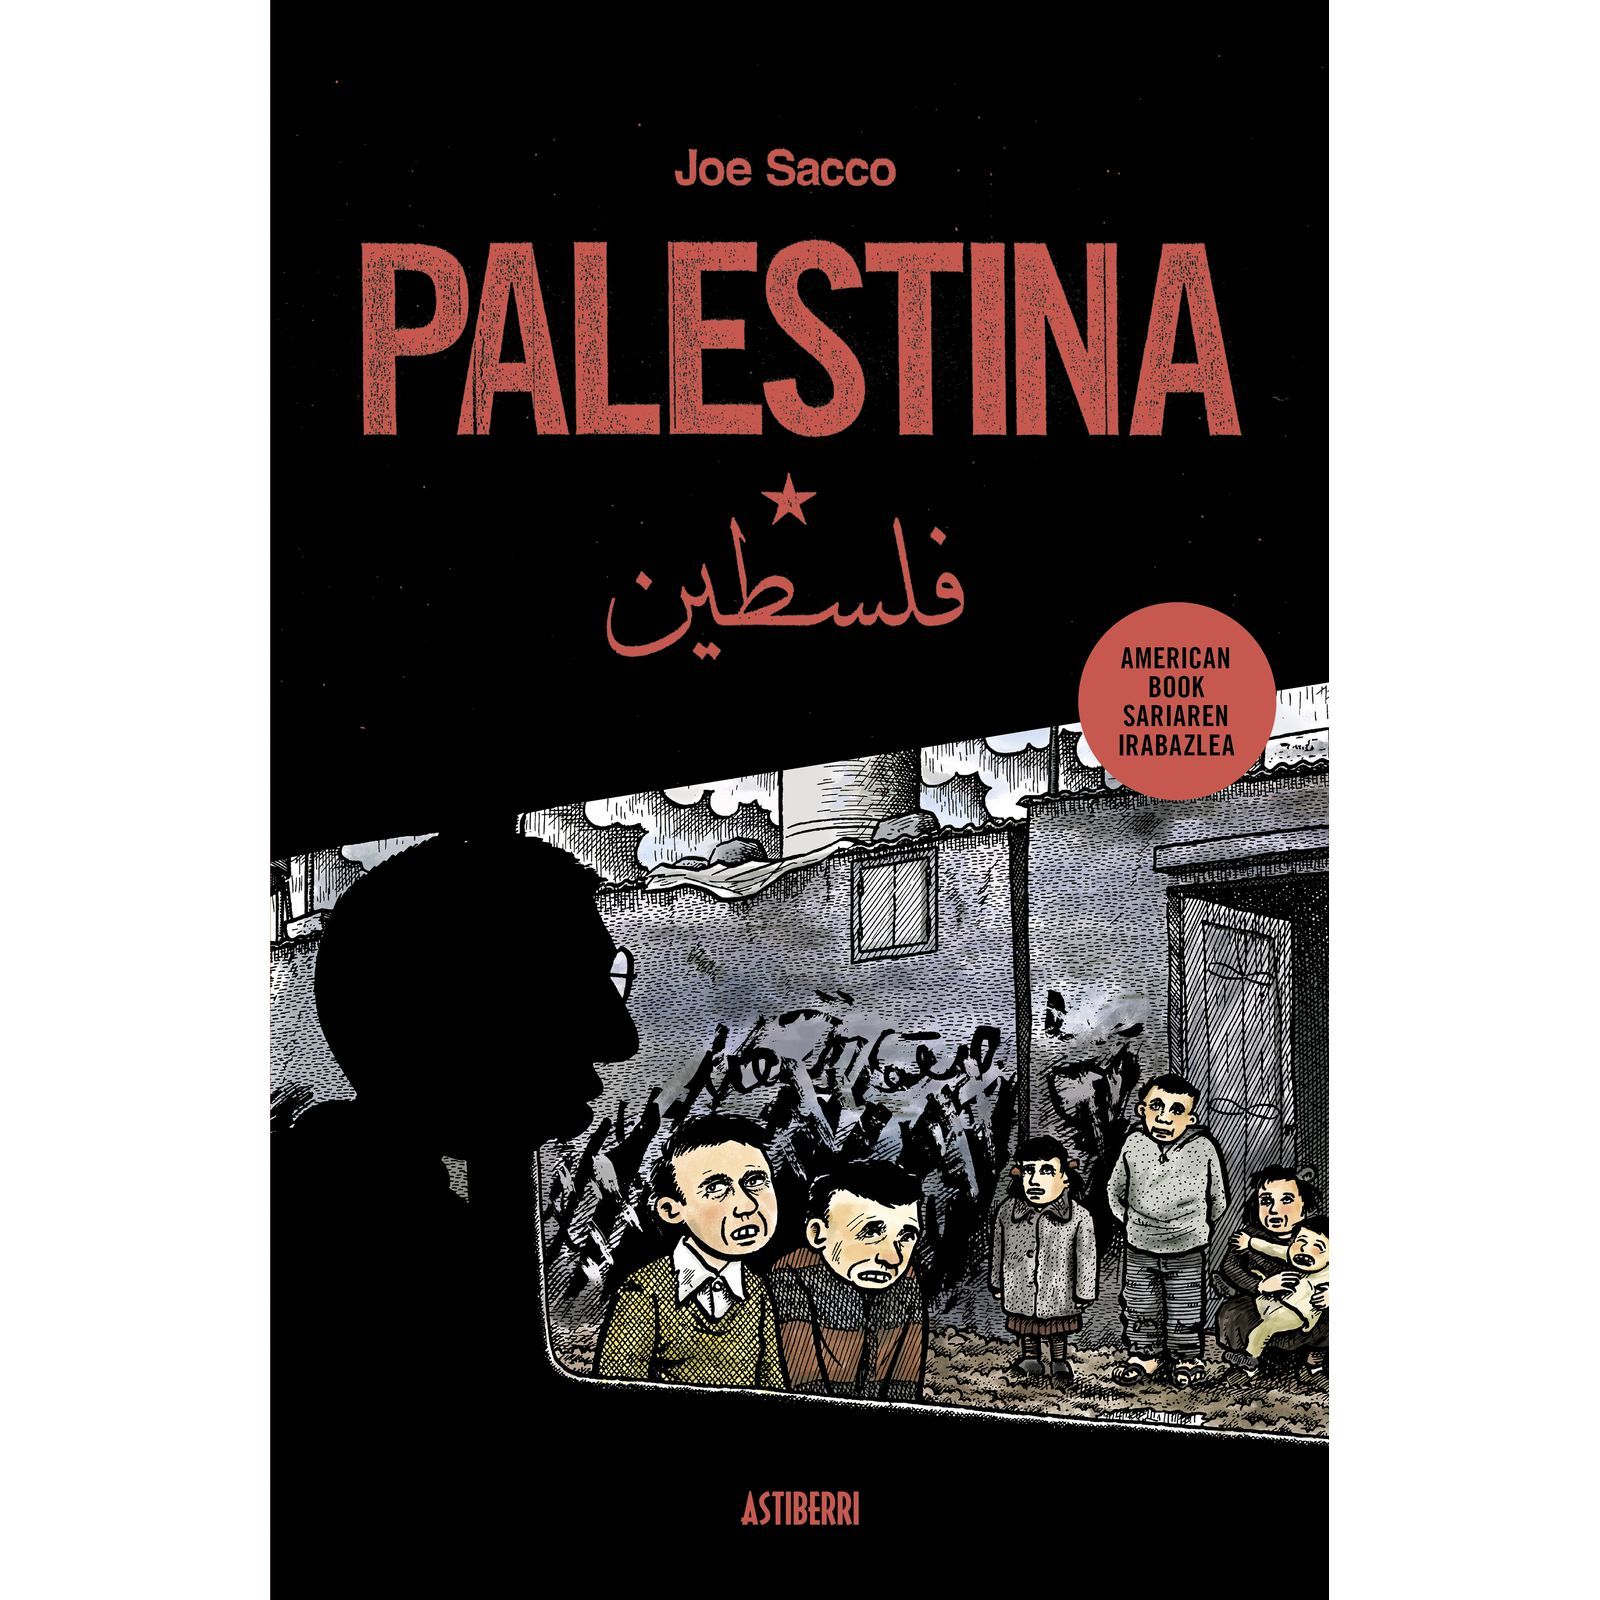 Joe Saccoren 'Palestina'